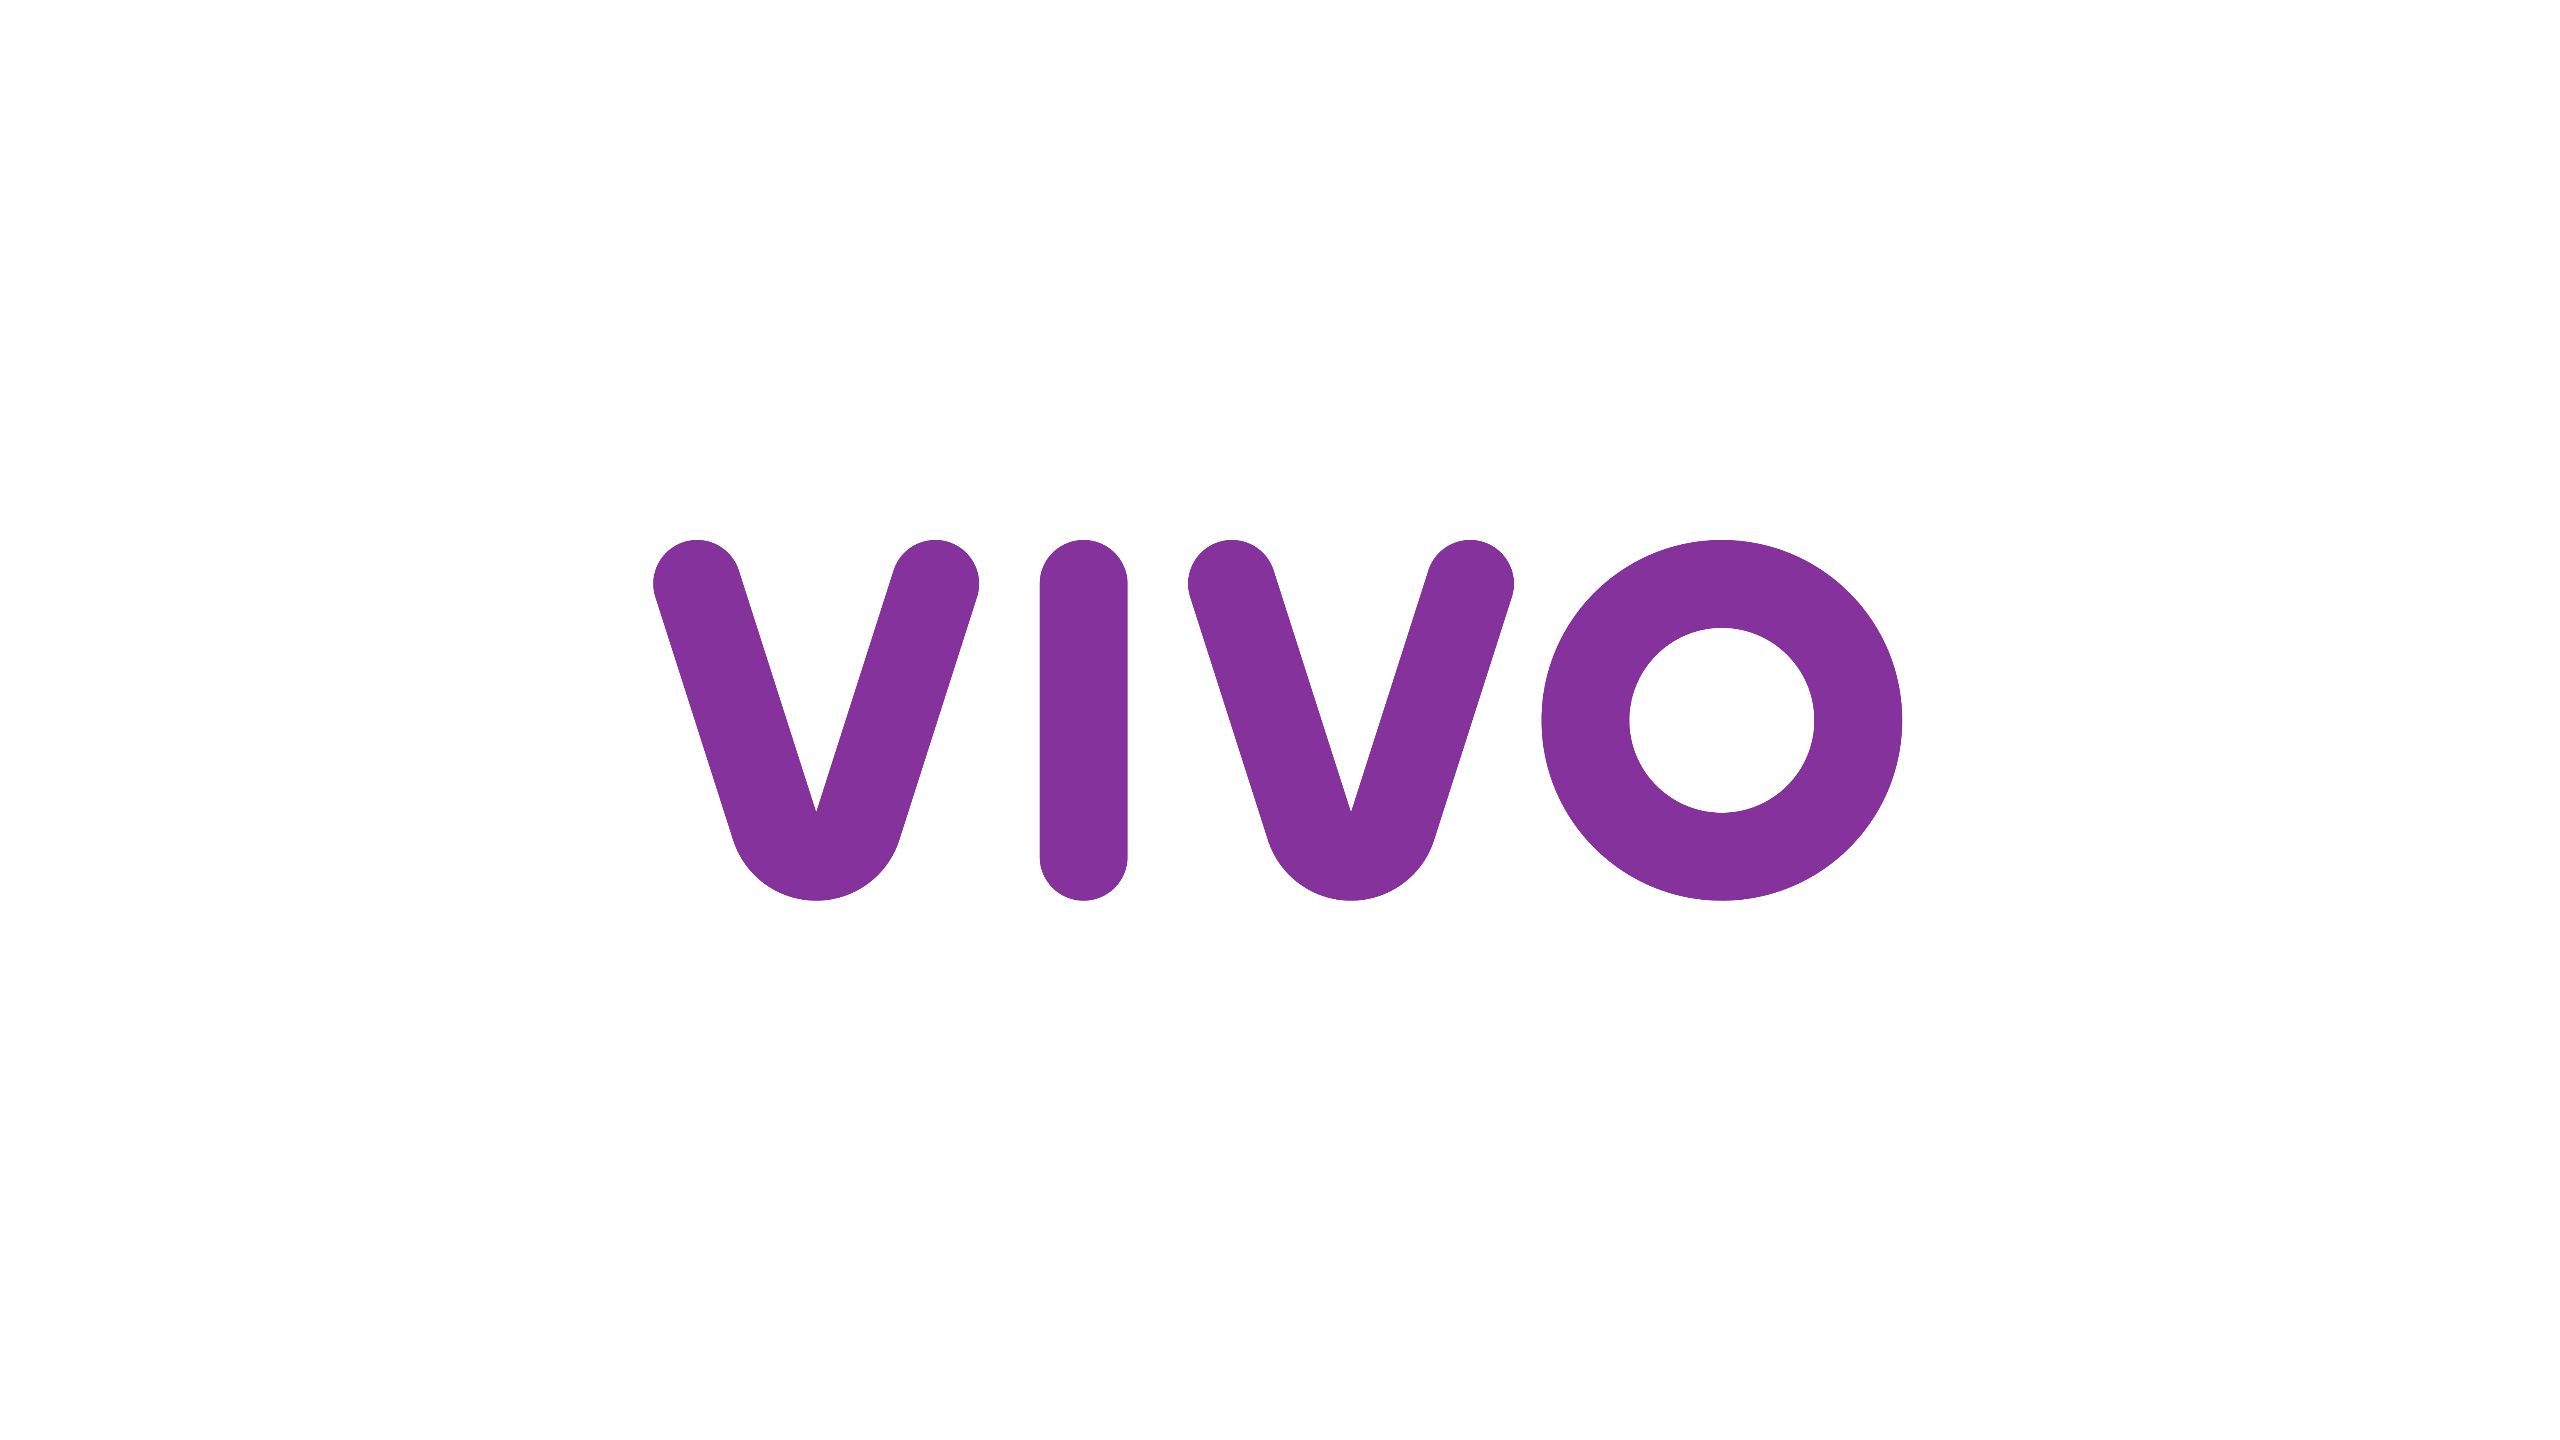 VIVO_Master_Logotype_Purple.jpg